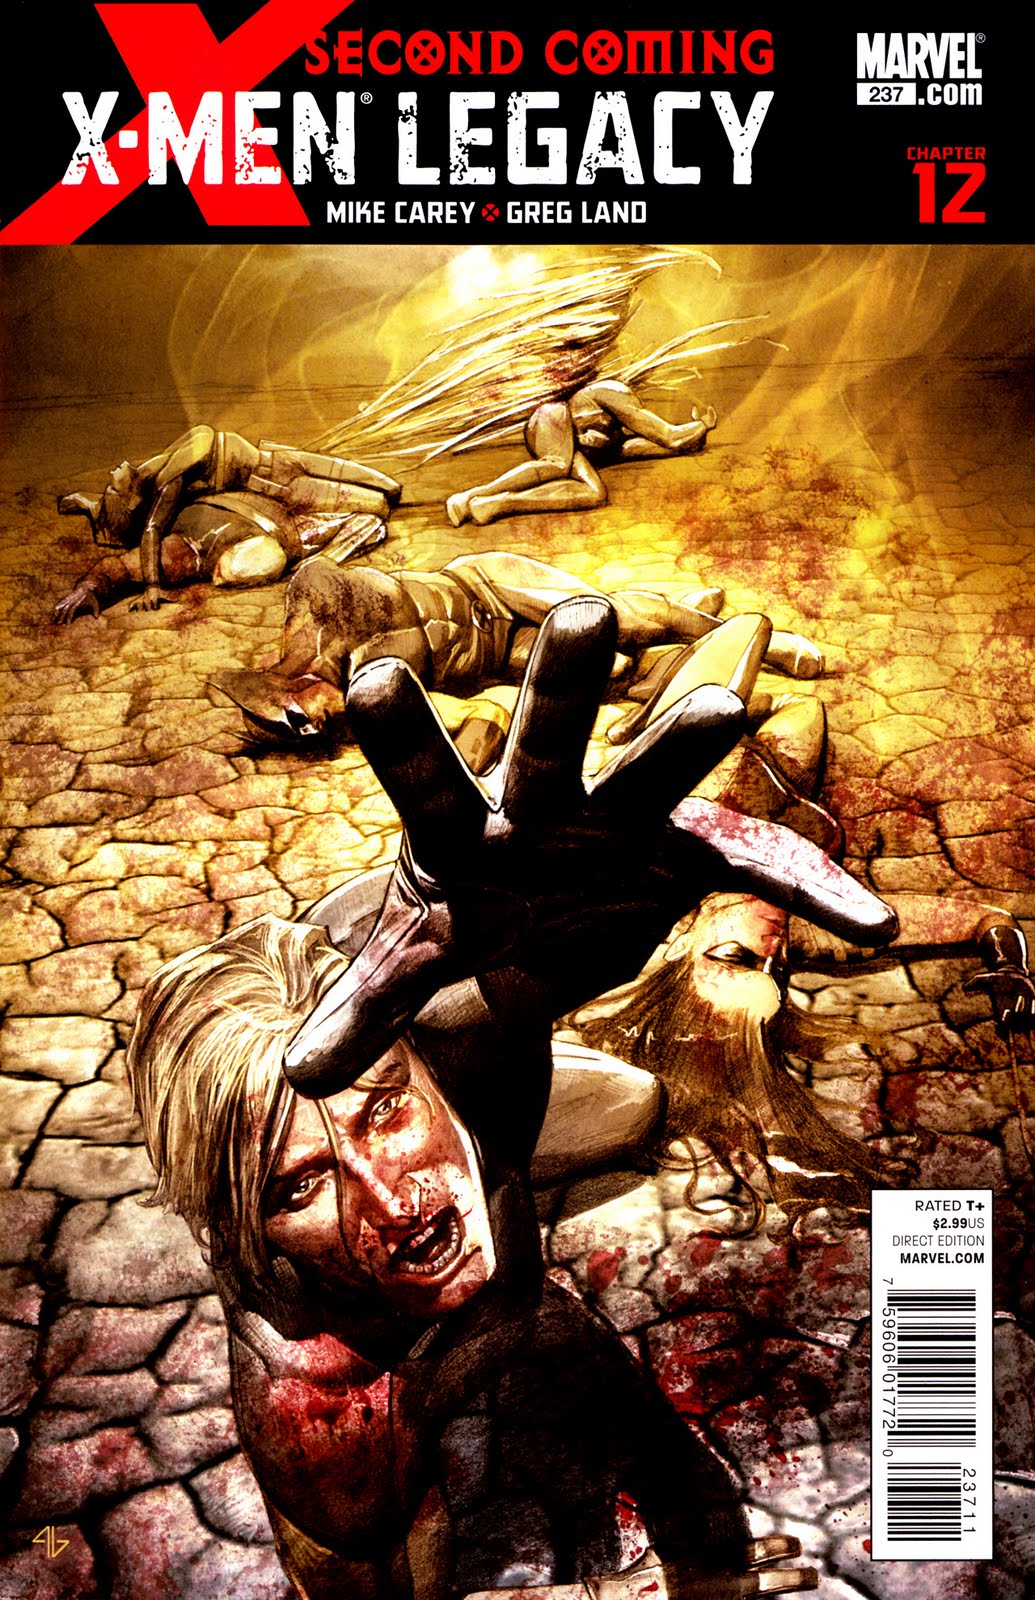 X-Men: Second Coming Issue #2 - readcomiconlineto